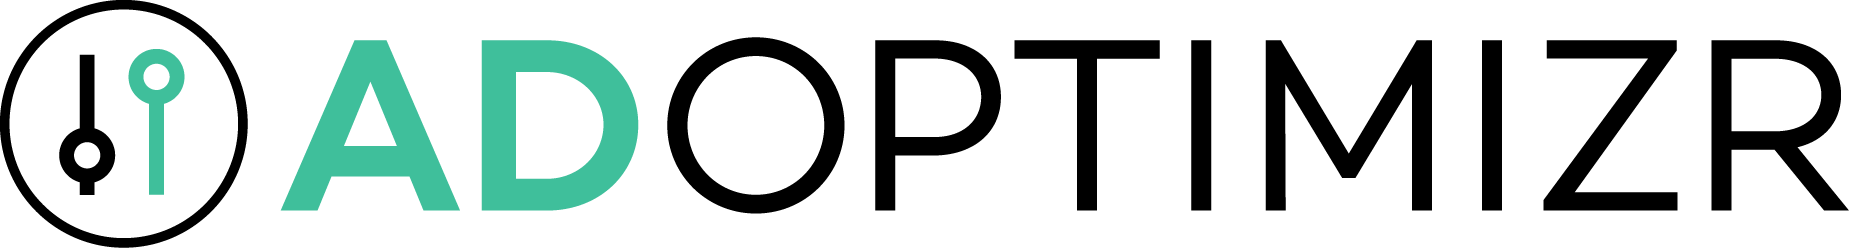 Adoptimizer Logo